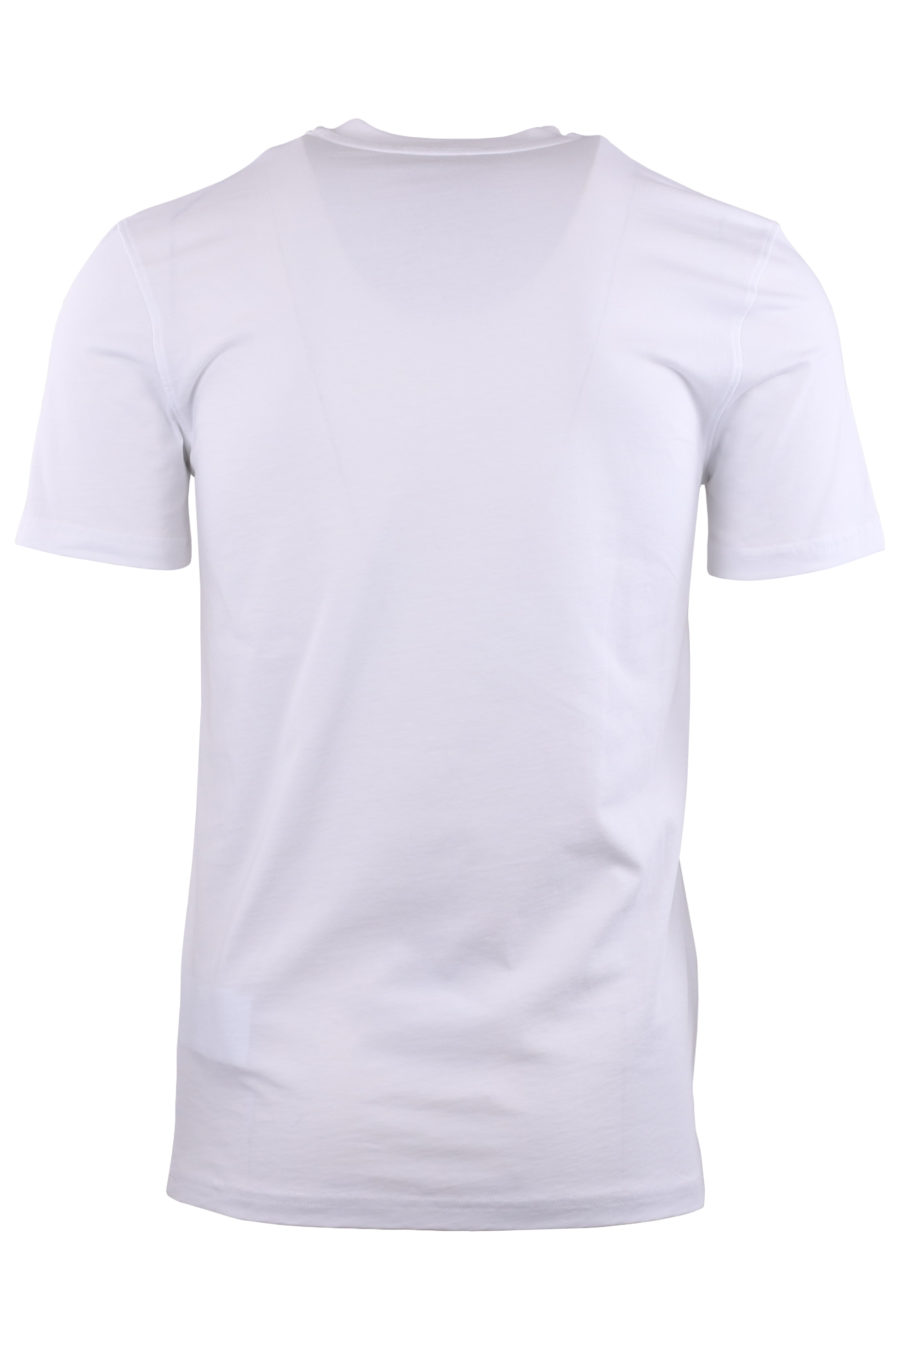 White T-shirt with gold rubber logo - fcd1c644444ba1b9da091d8b719a551232f3497cd3